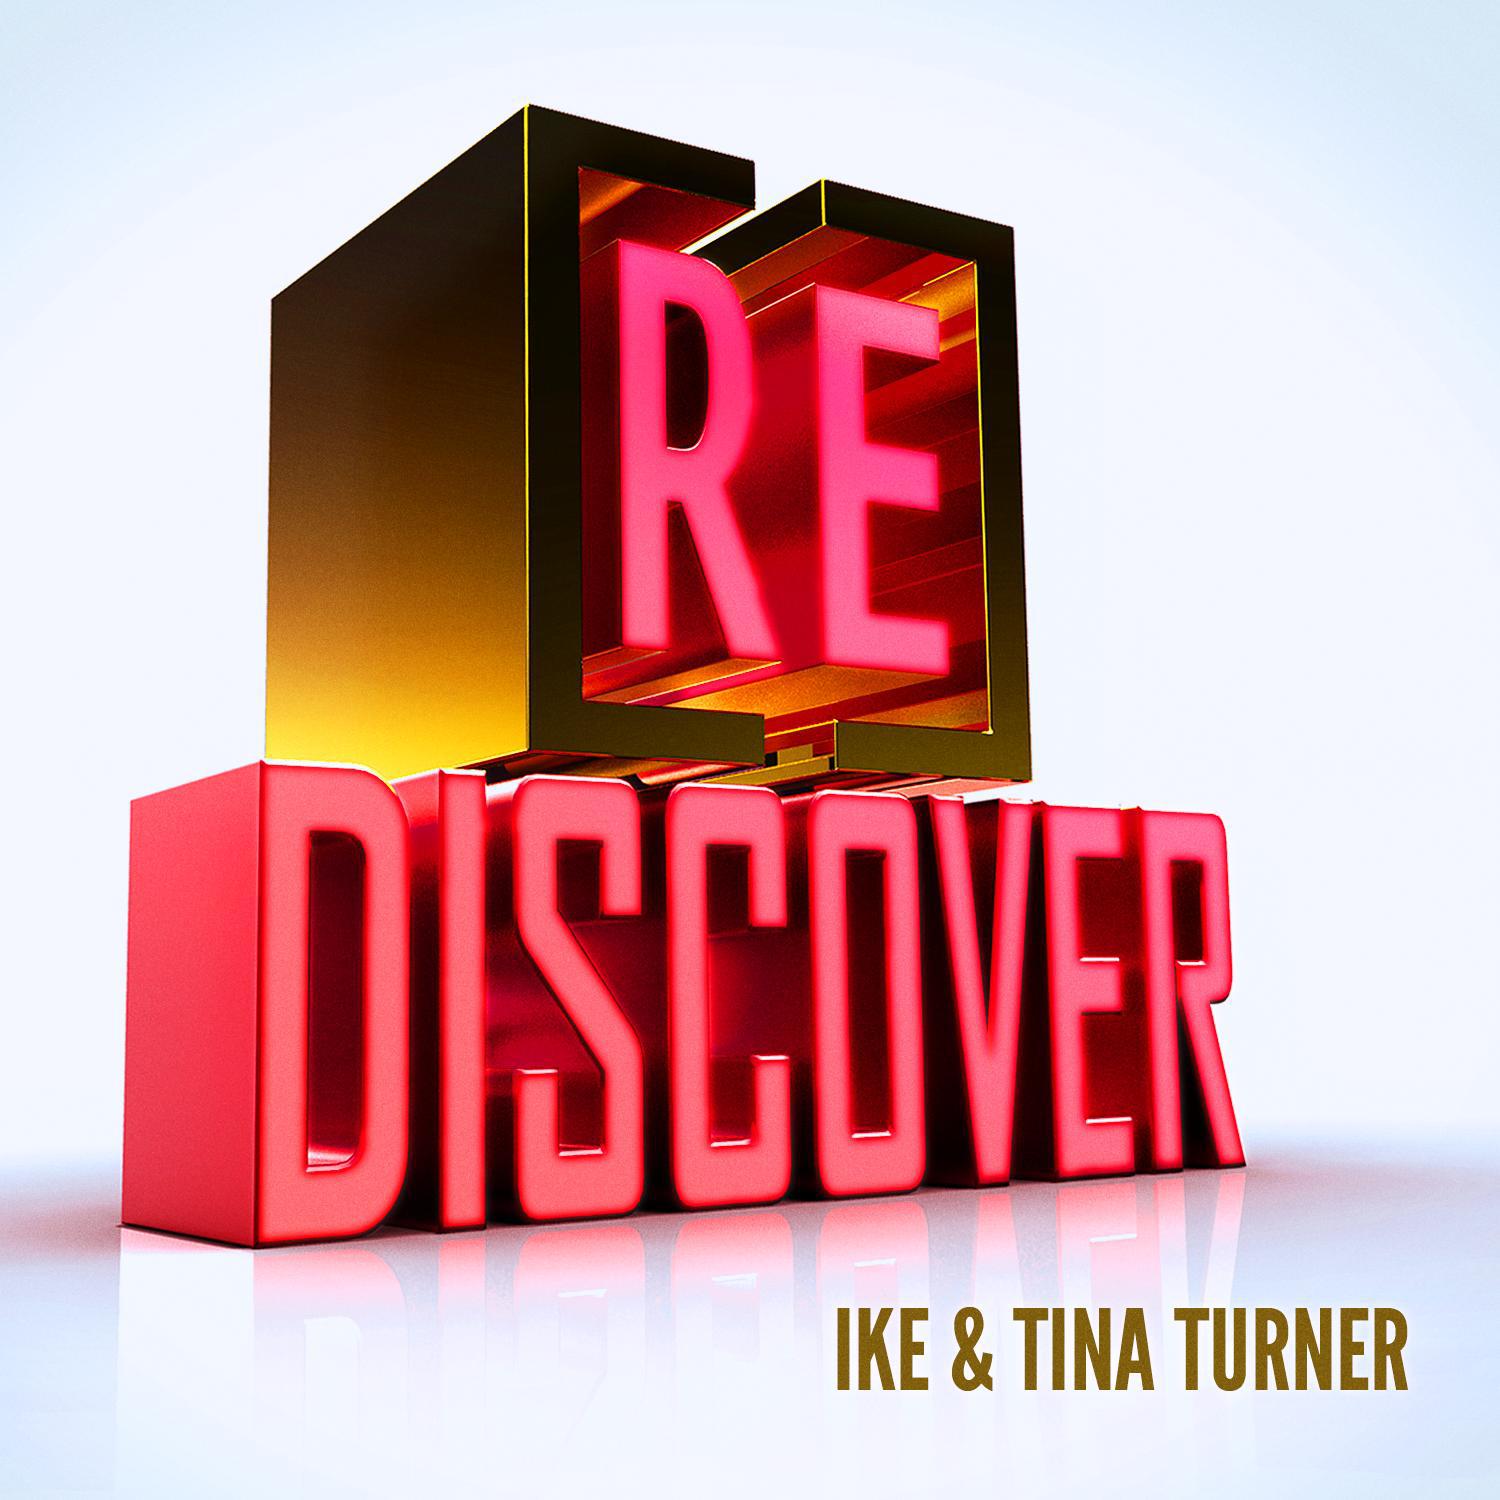 [RE]discover Ike & Tina Turner